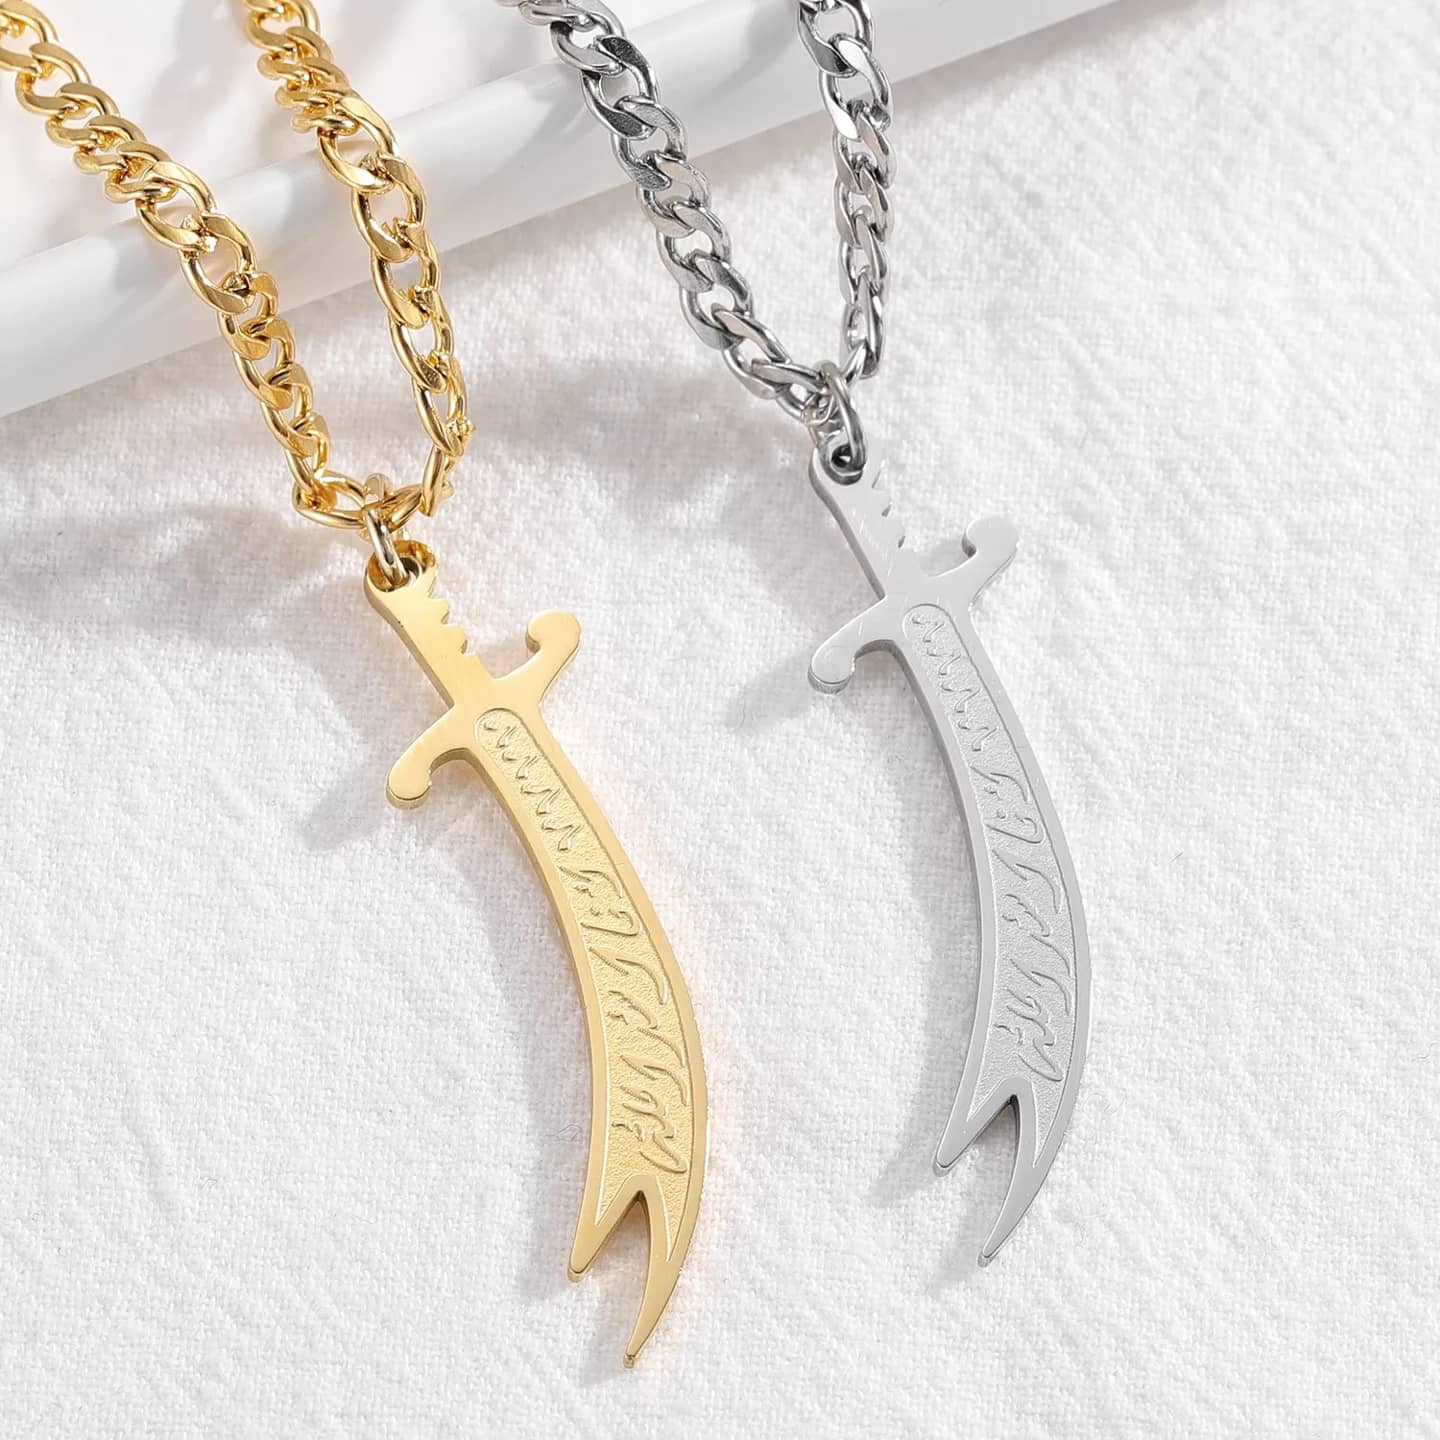 DEEN - Zulfiqar Sword - Mens Arabic Pendant Necklace Silver or Black for Men - Islamic Motivational Inspirational Gift